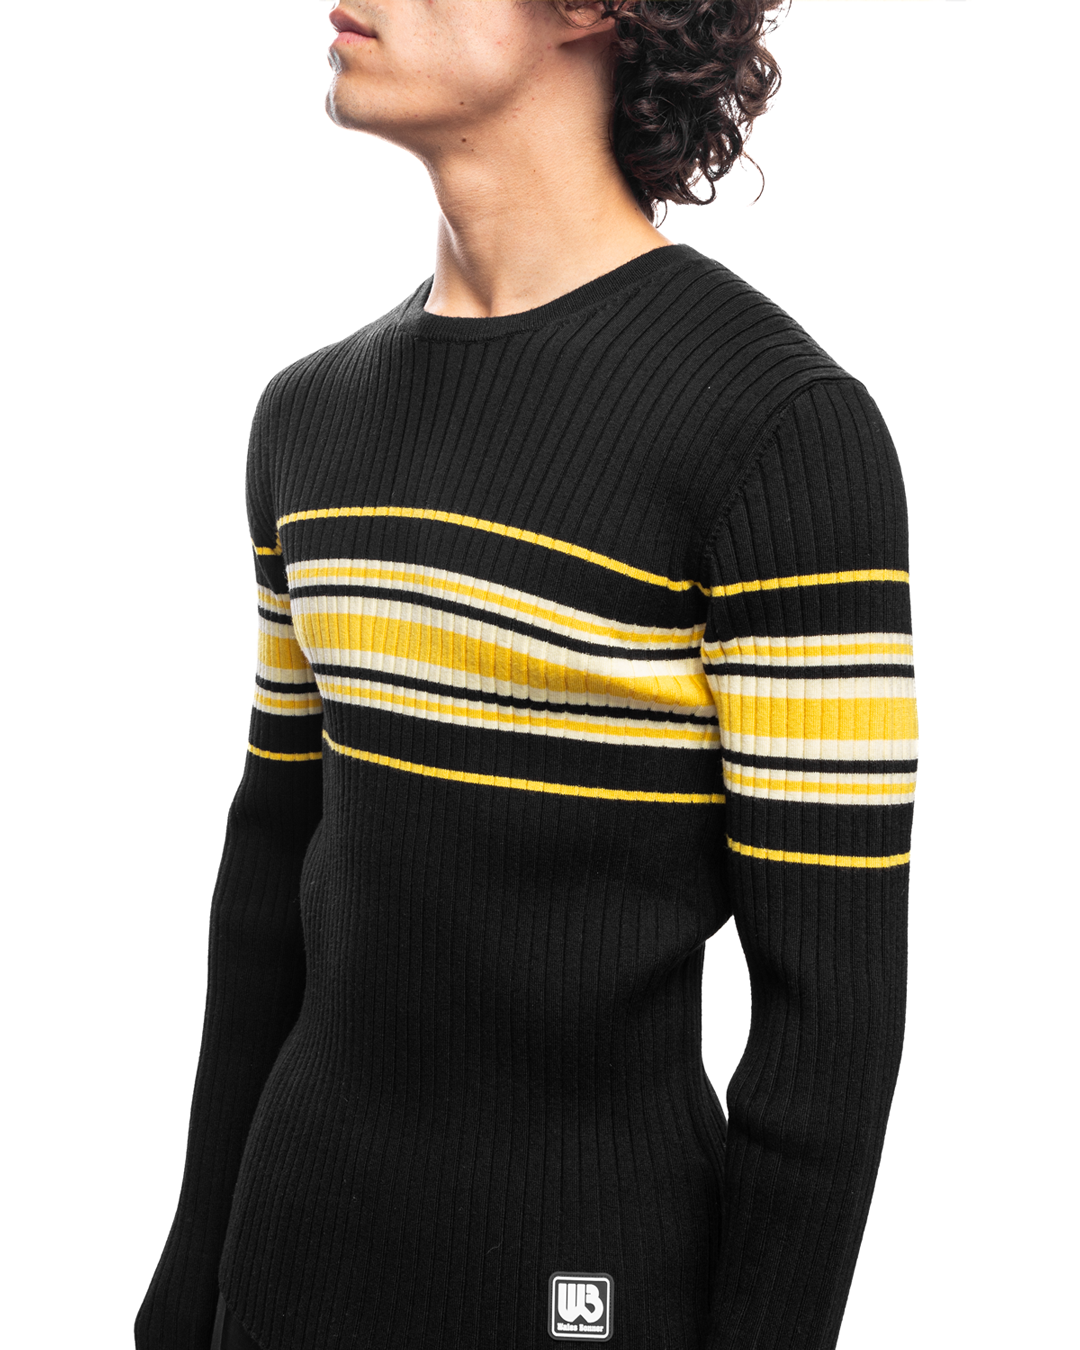 Show Knit Top Wool & Lycra Knit Black/Yellow